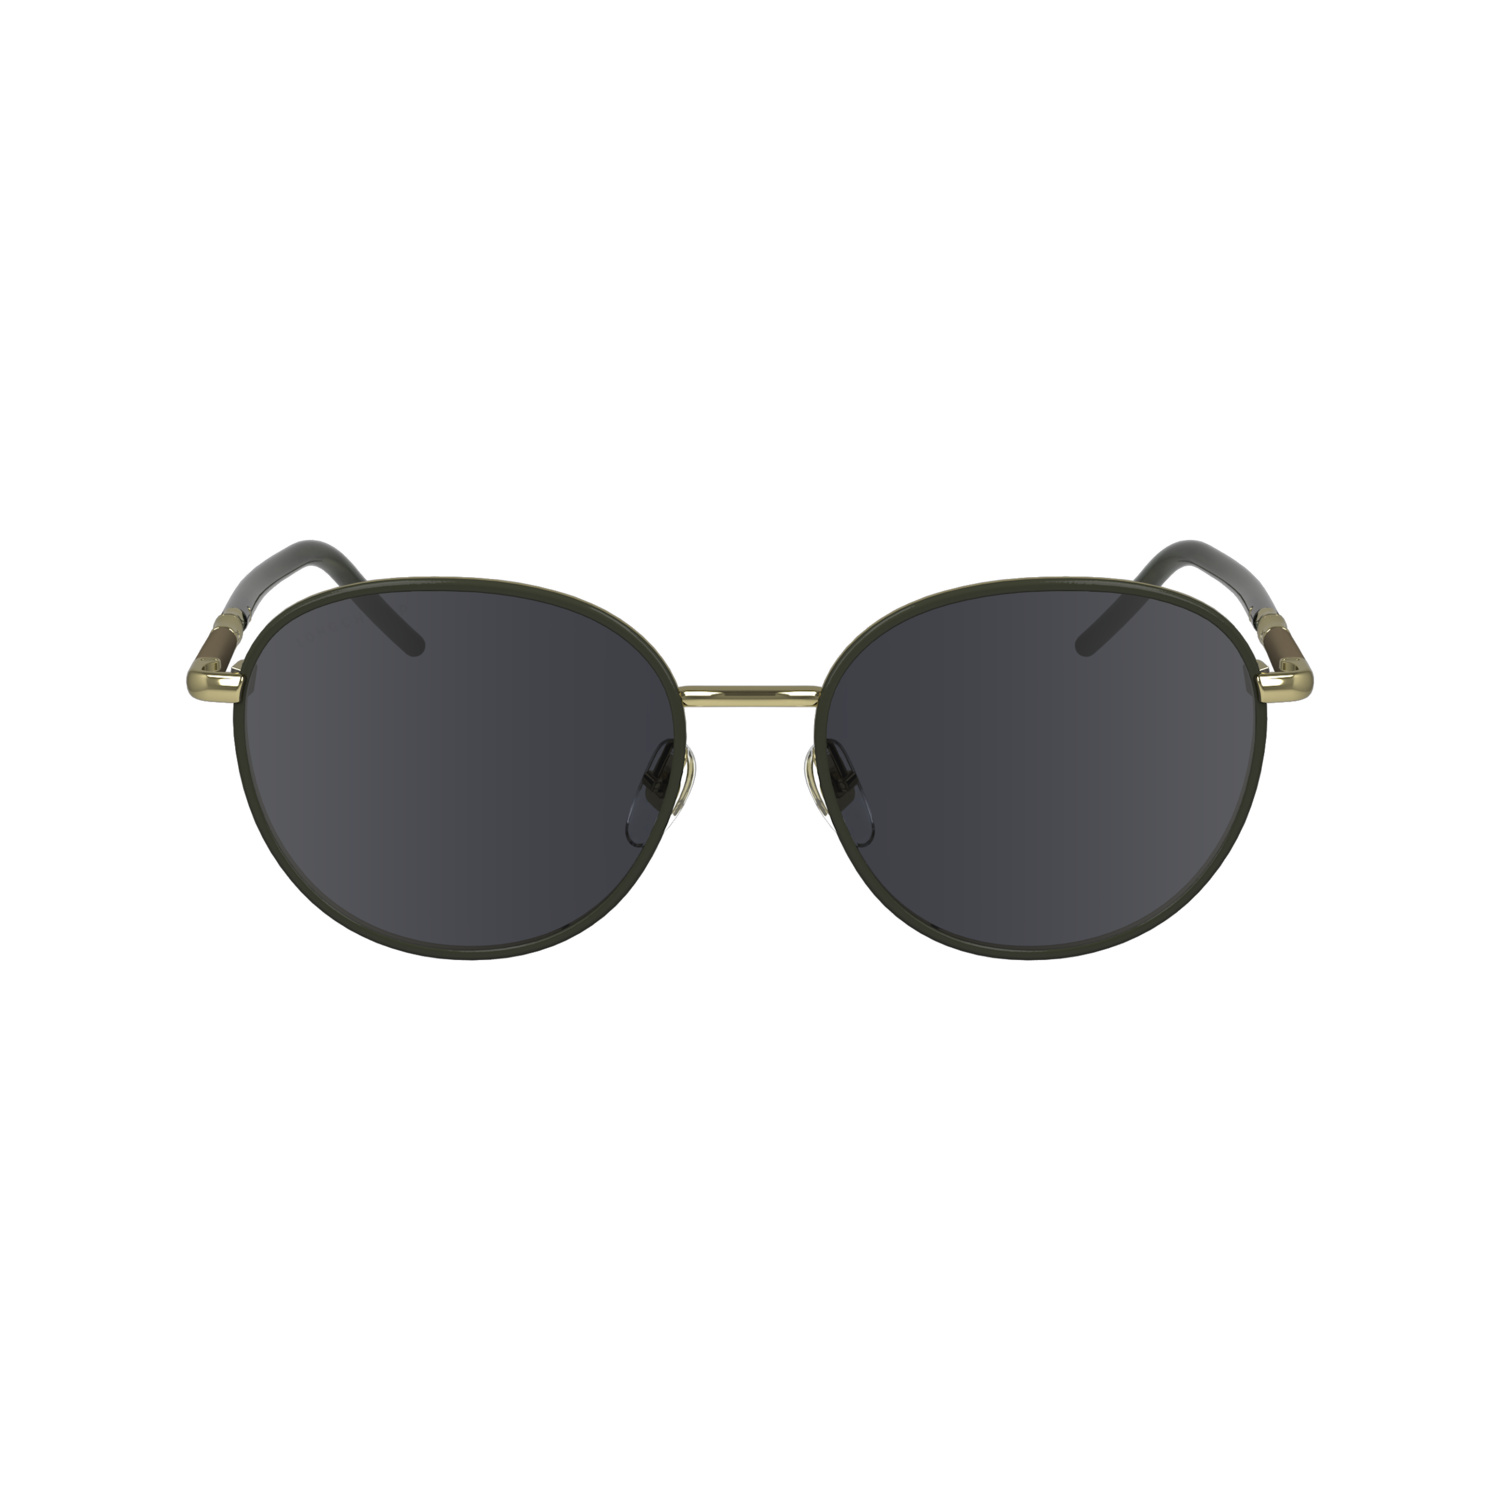 Longchamp Sunglasses In Black